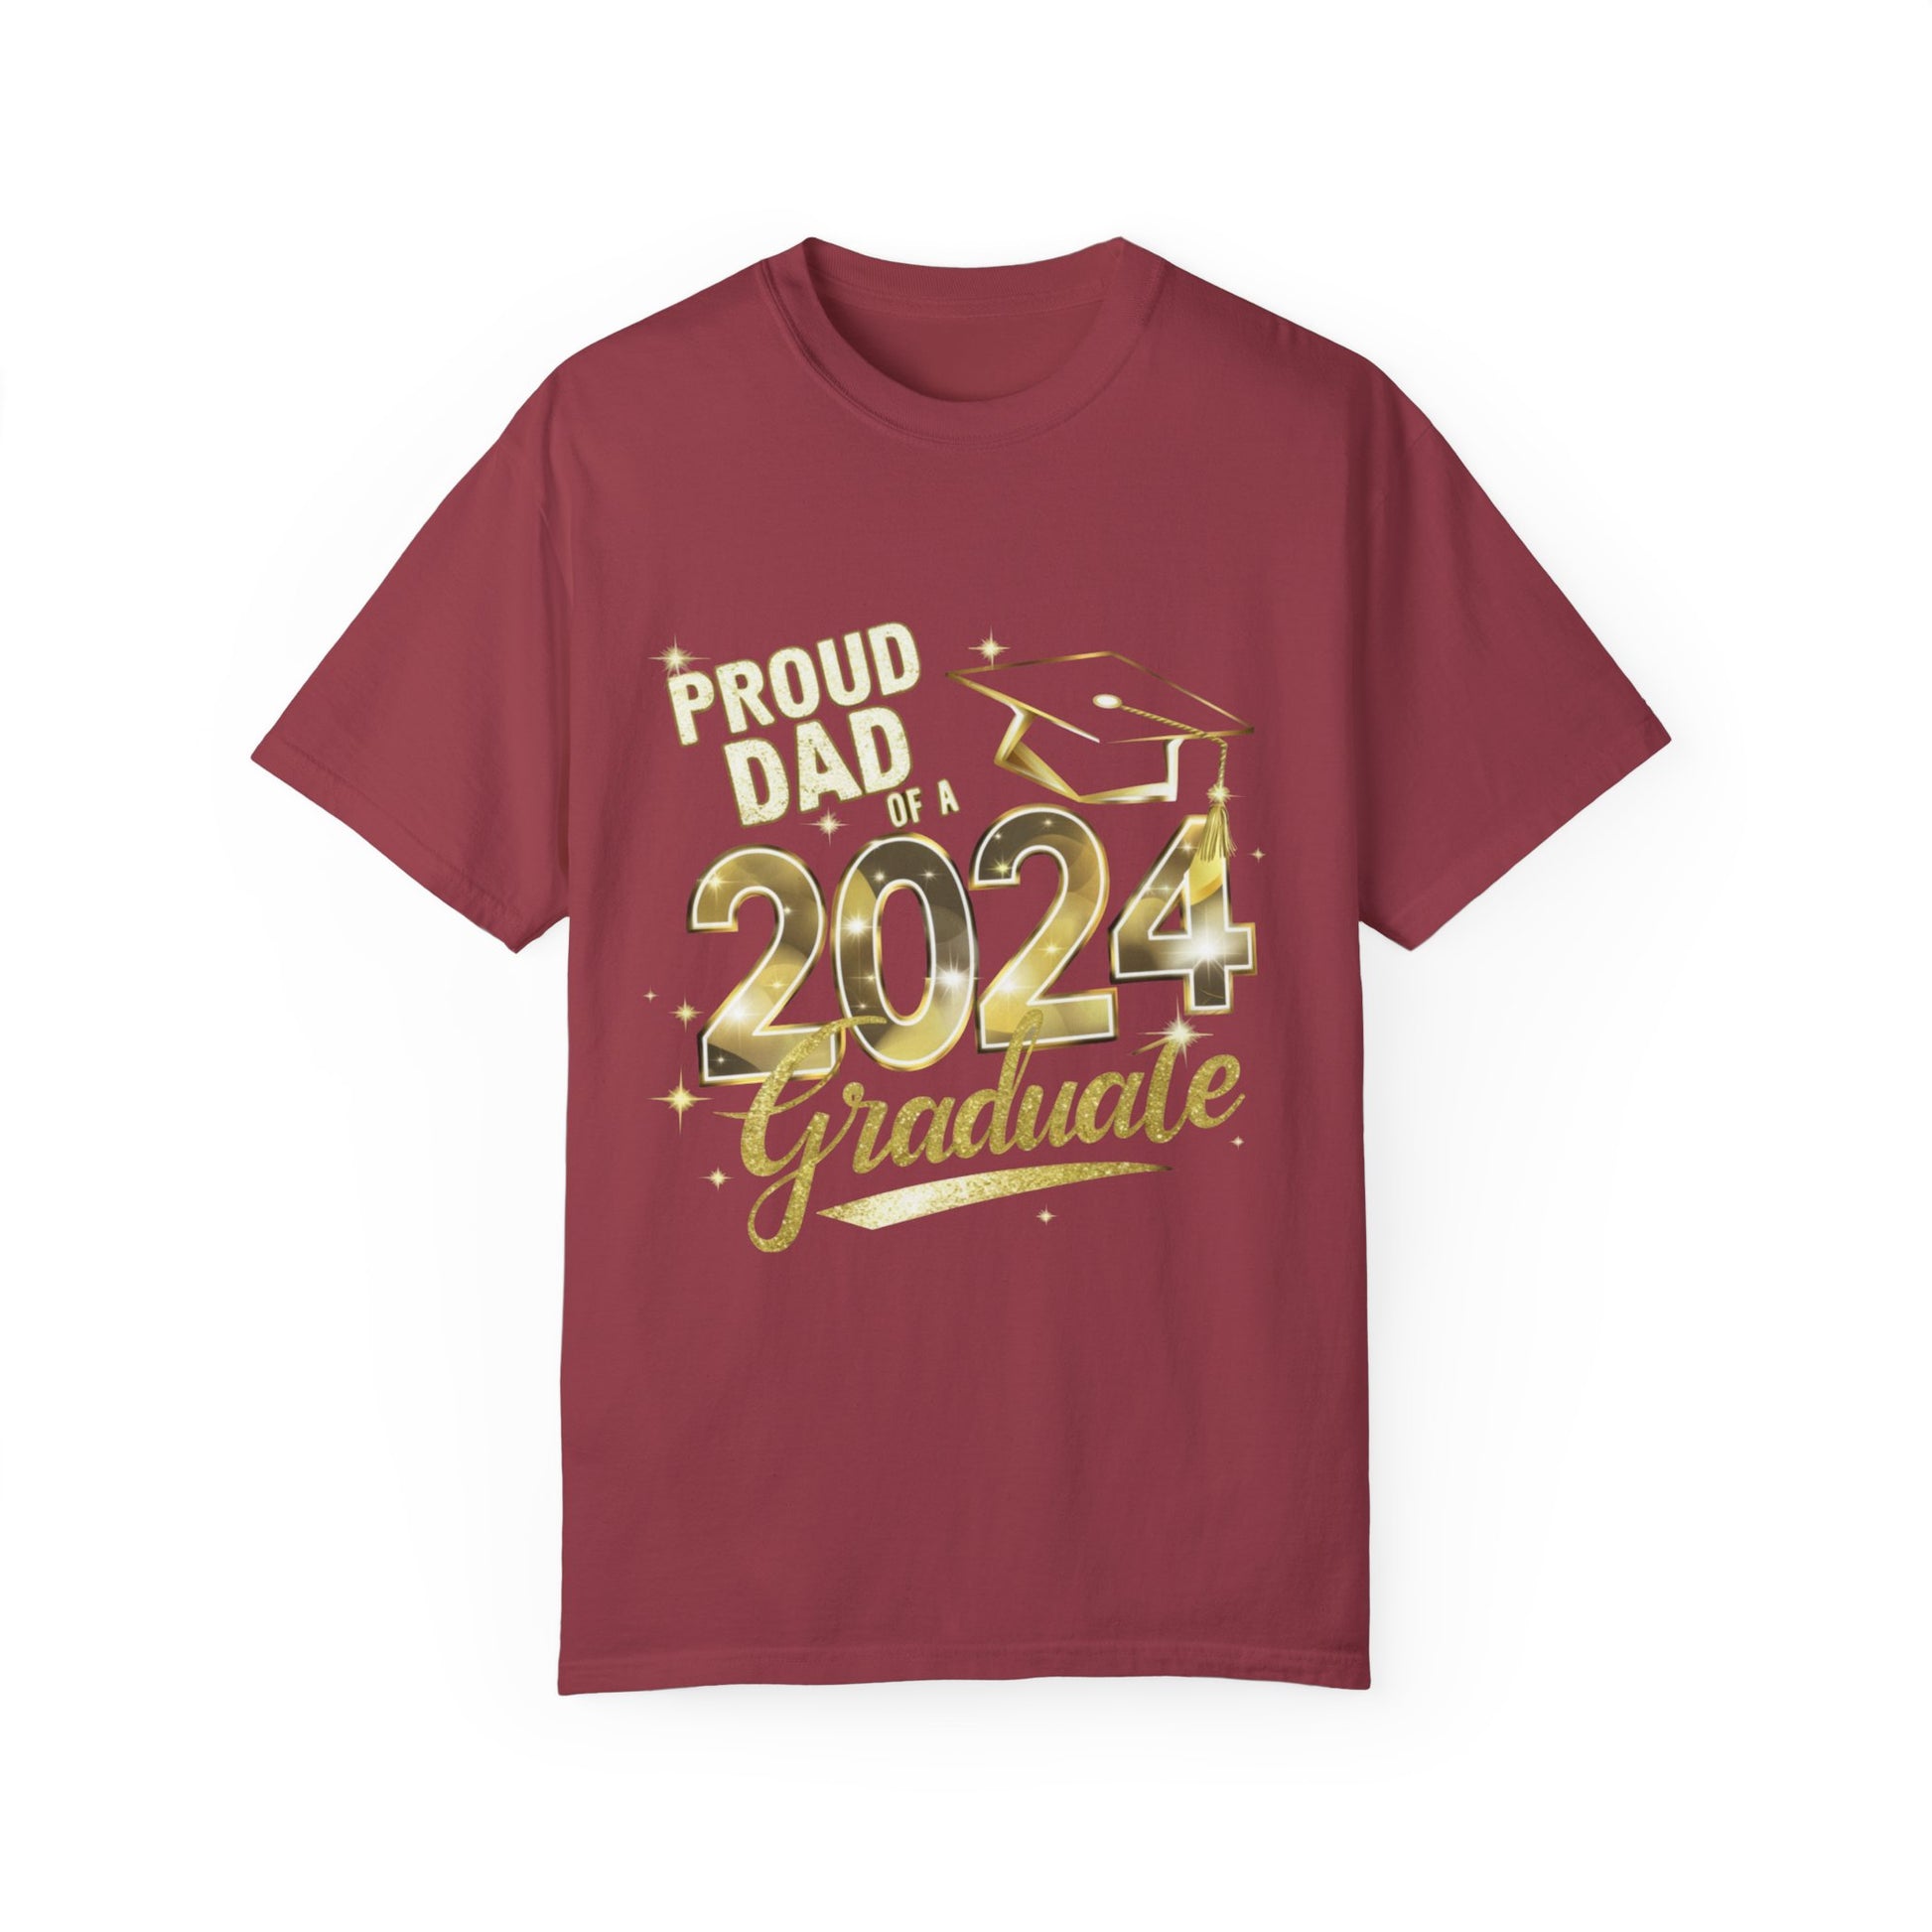 Proud of Dad 2024 Graduate Unisex Garment-dyed T-shirt Cotton Funny Humorous Graphic Soft Premium Unisex Men Women Chili T-shirt Birthday Gift-7